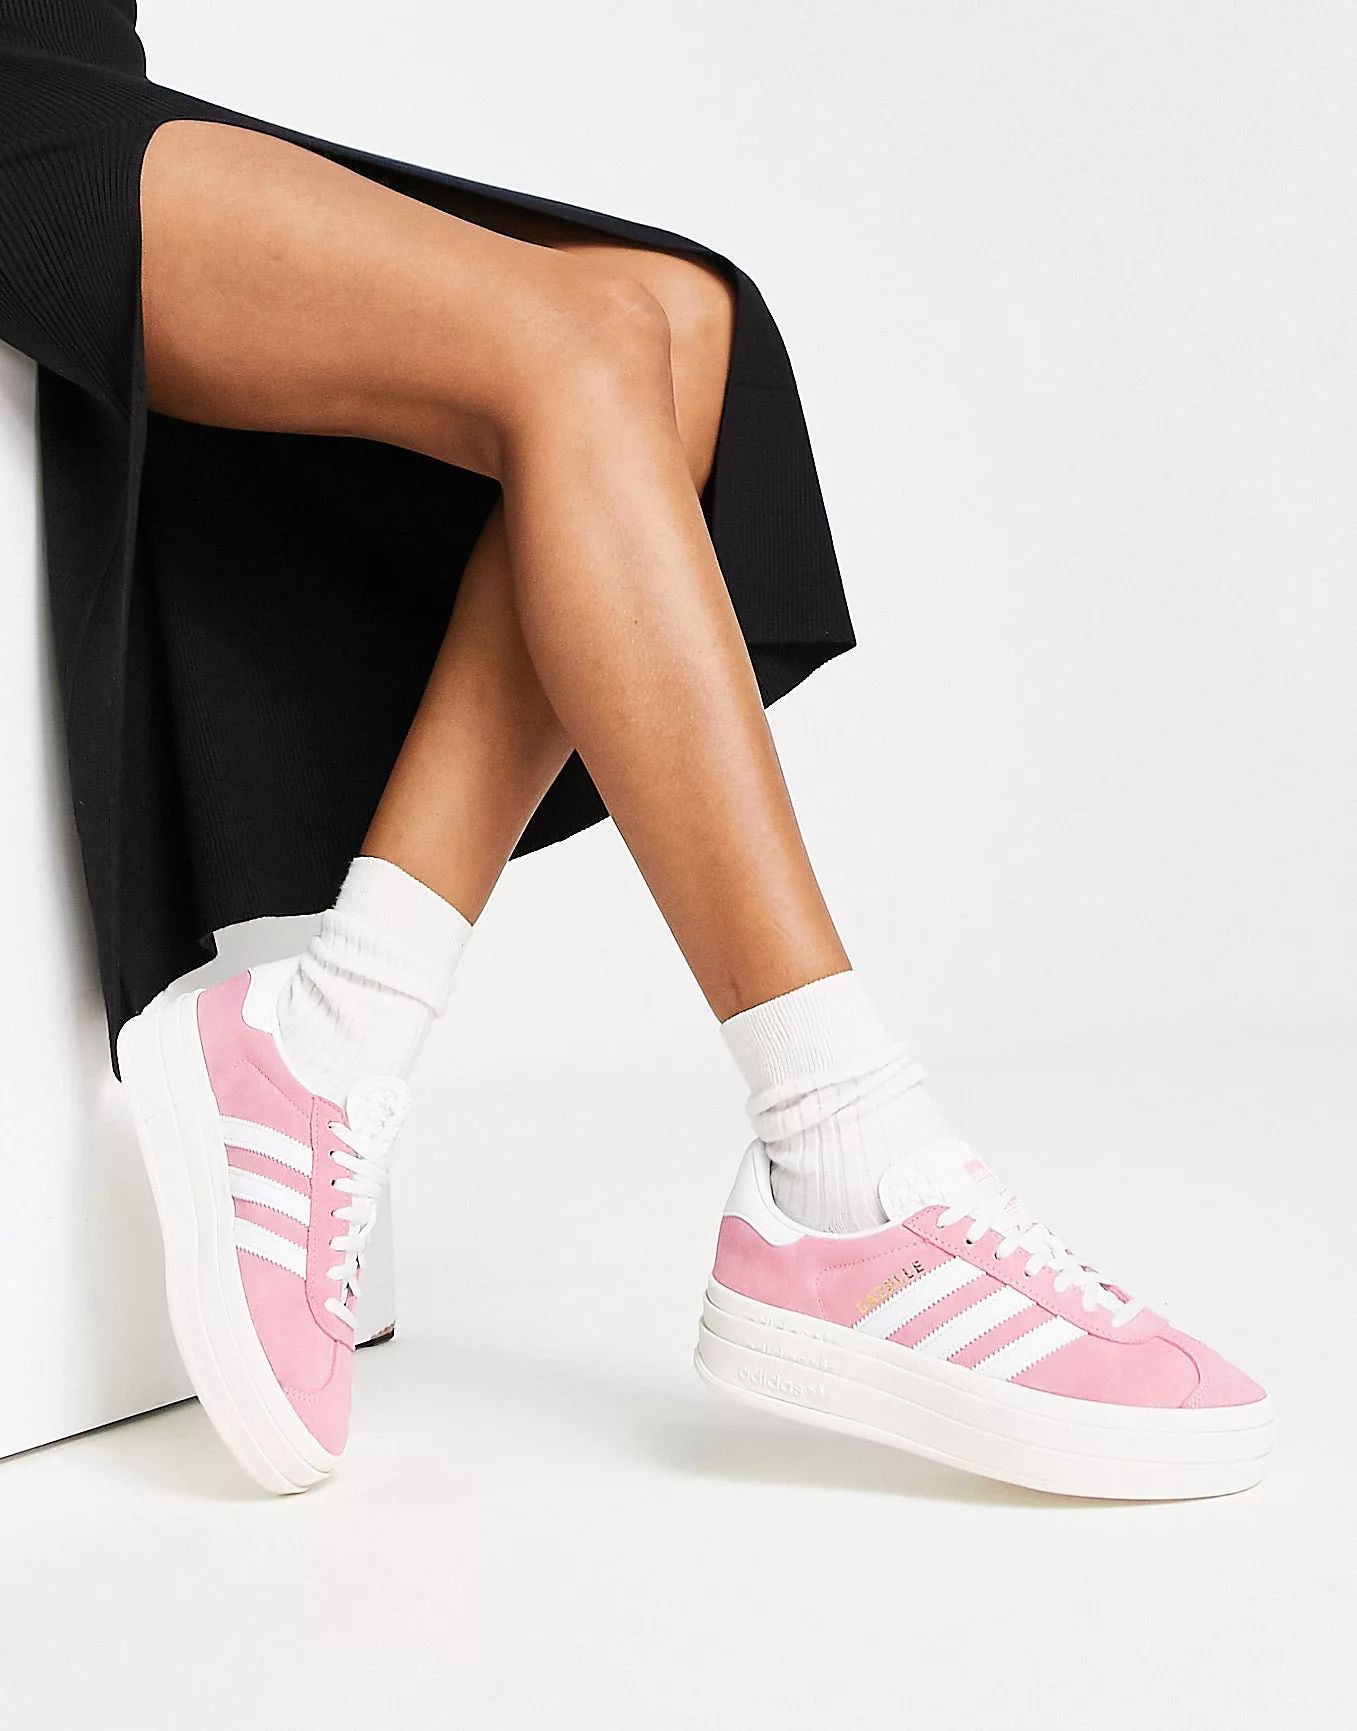 adidas Originals Gazelle Bold platform trainers in pink and white | ASOS | ASOS (Global)